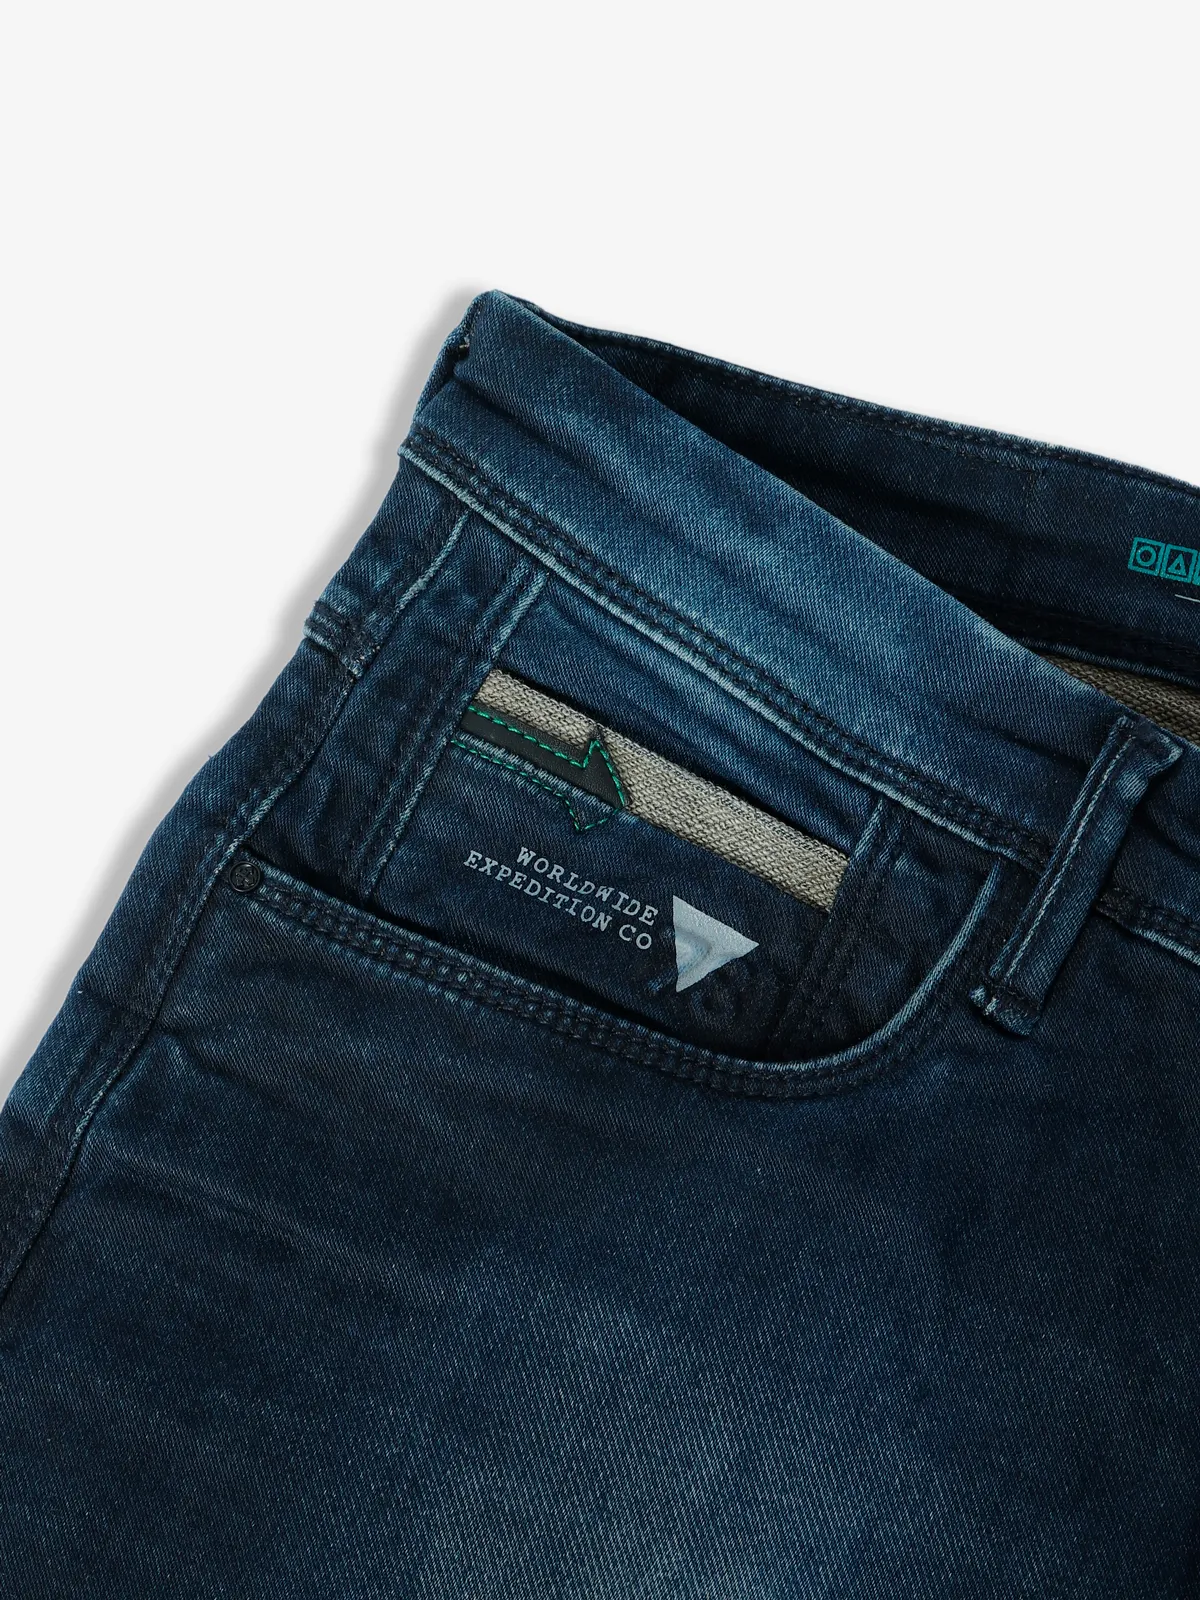 GS78 rama blue denim slim fit jeans